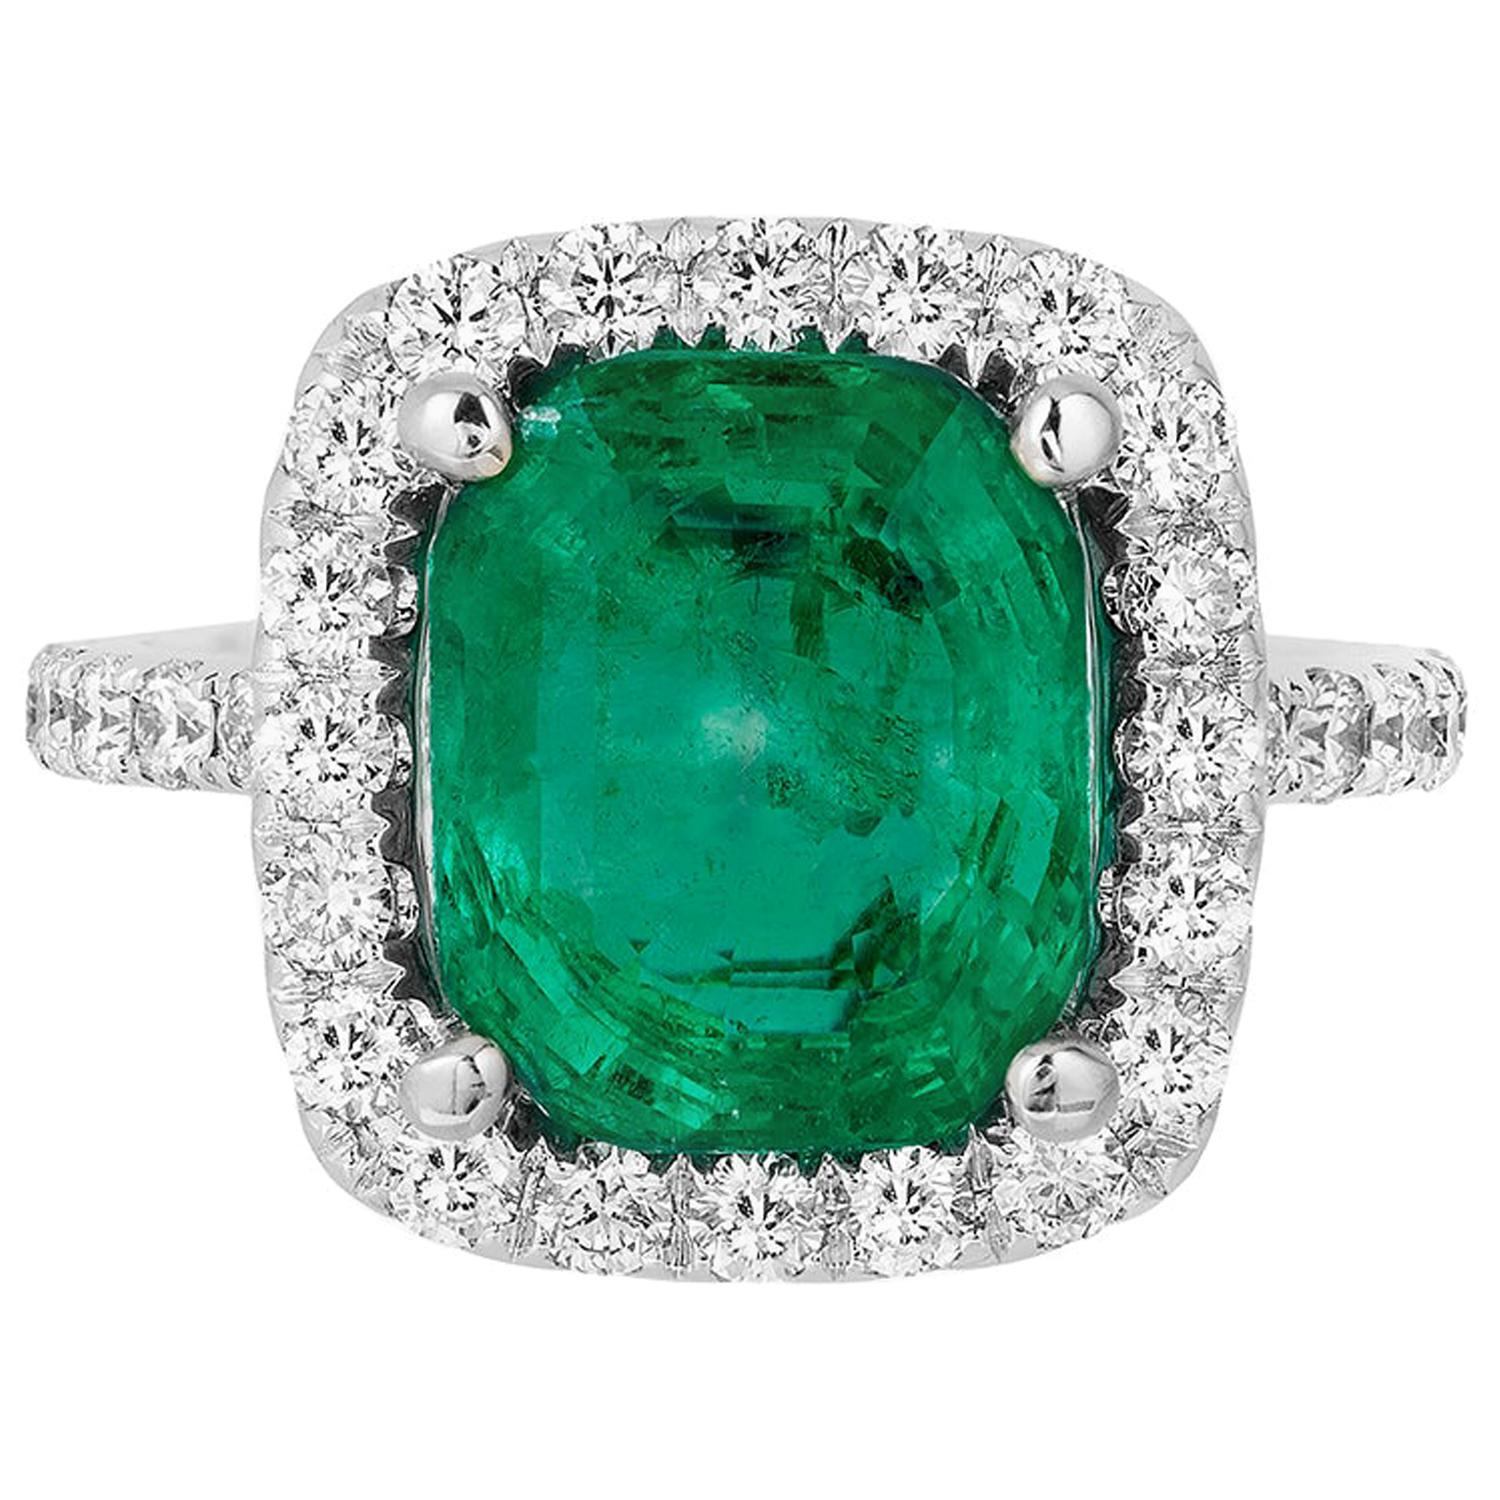 Andreoli 4.07 Carat Colombian Emerald CDC Certified Diamond Ring 18 Karat